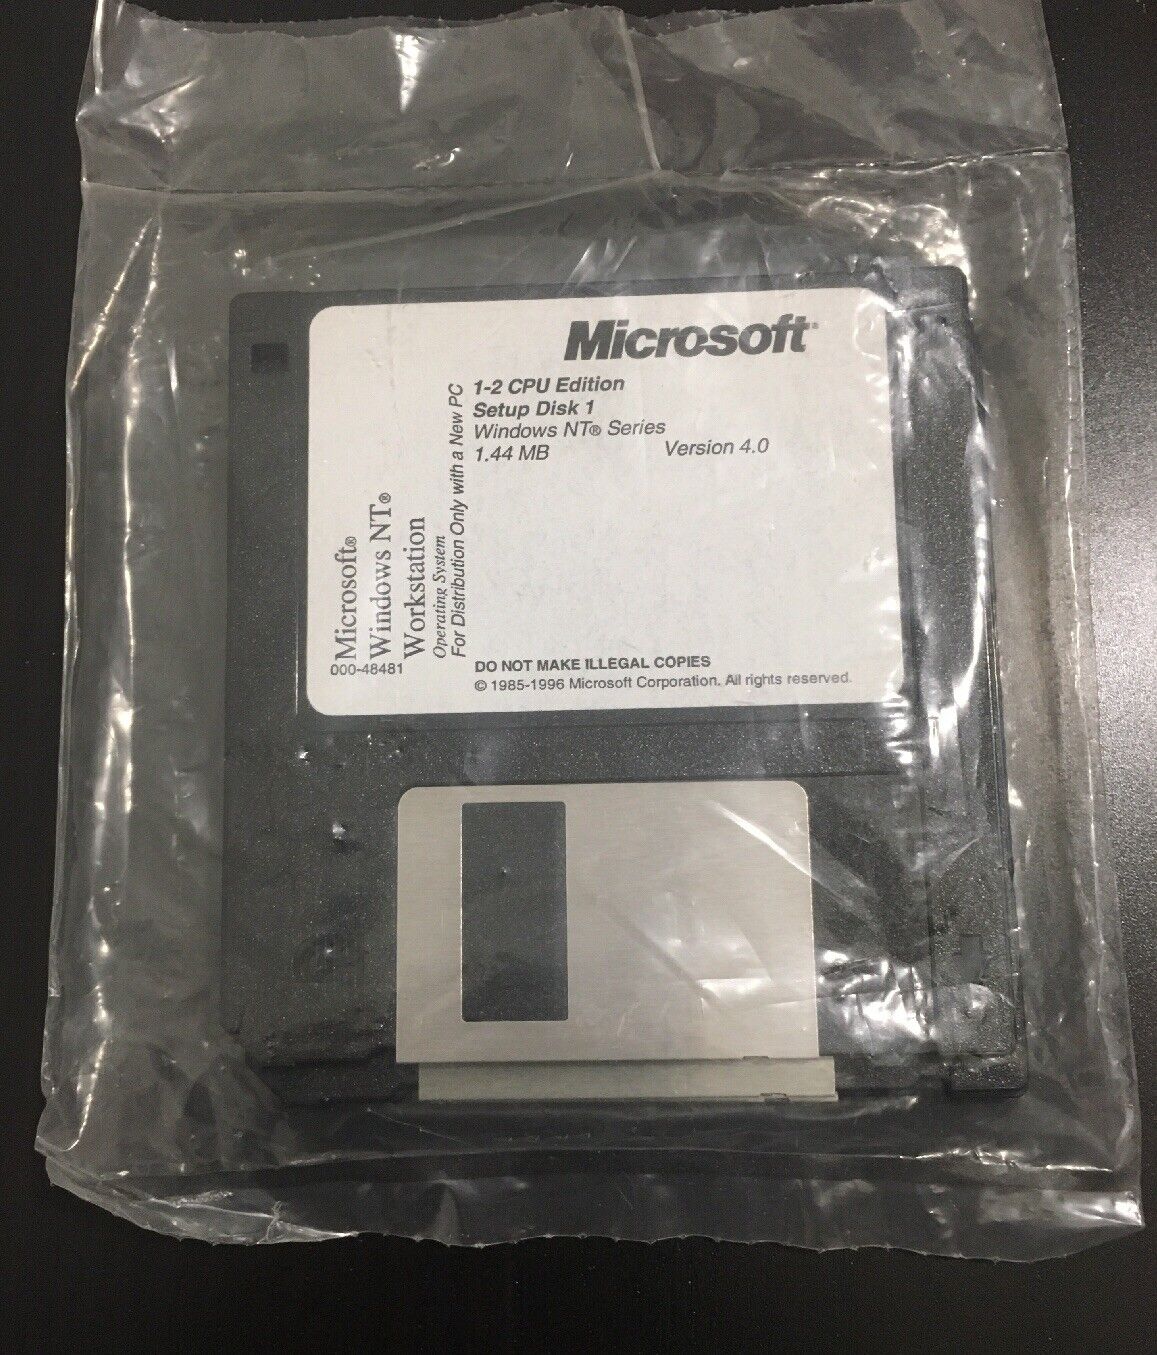 Microsoft Windows NT Workstation Operating System Floppy Disks 1-2 CPU Ed Sealed